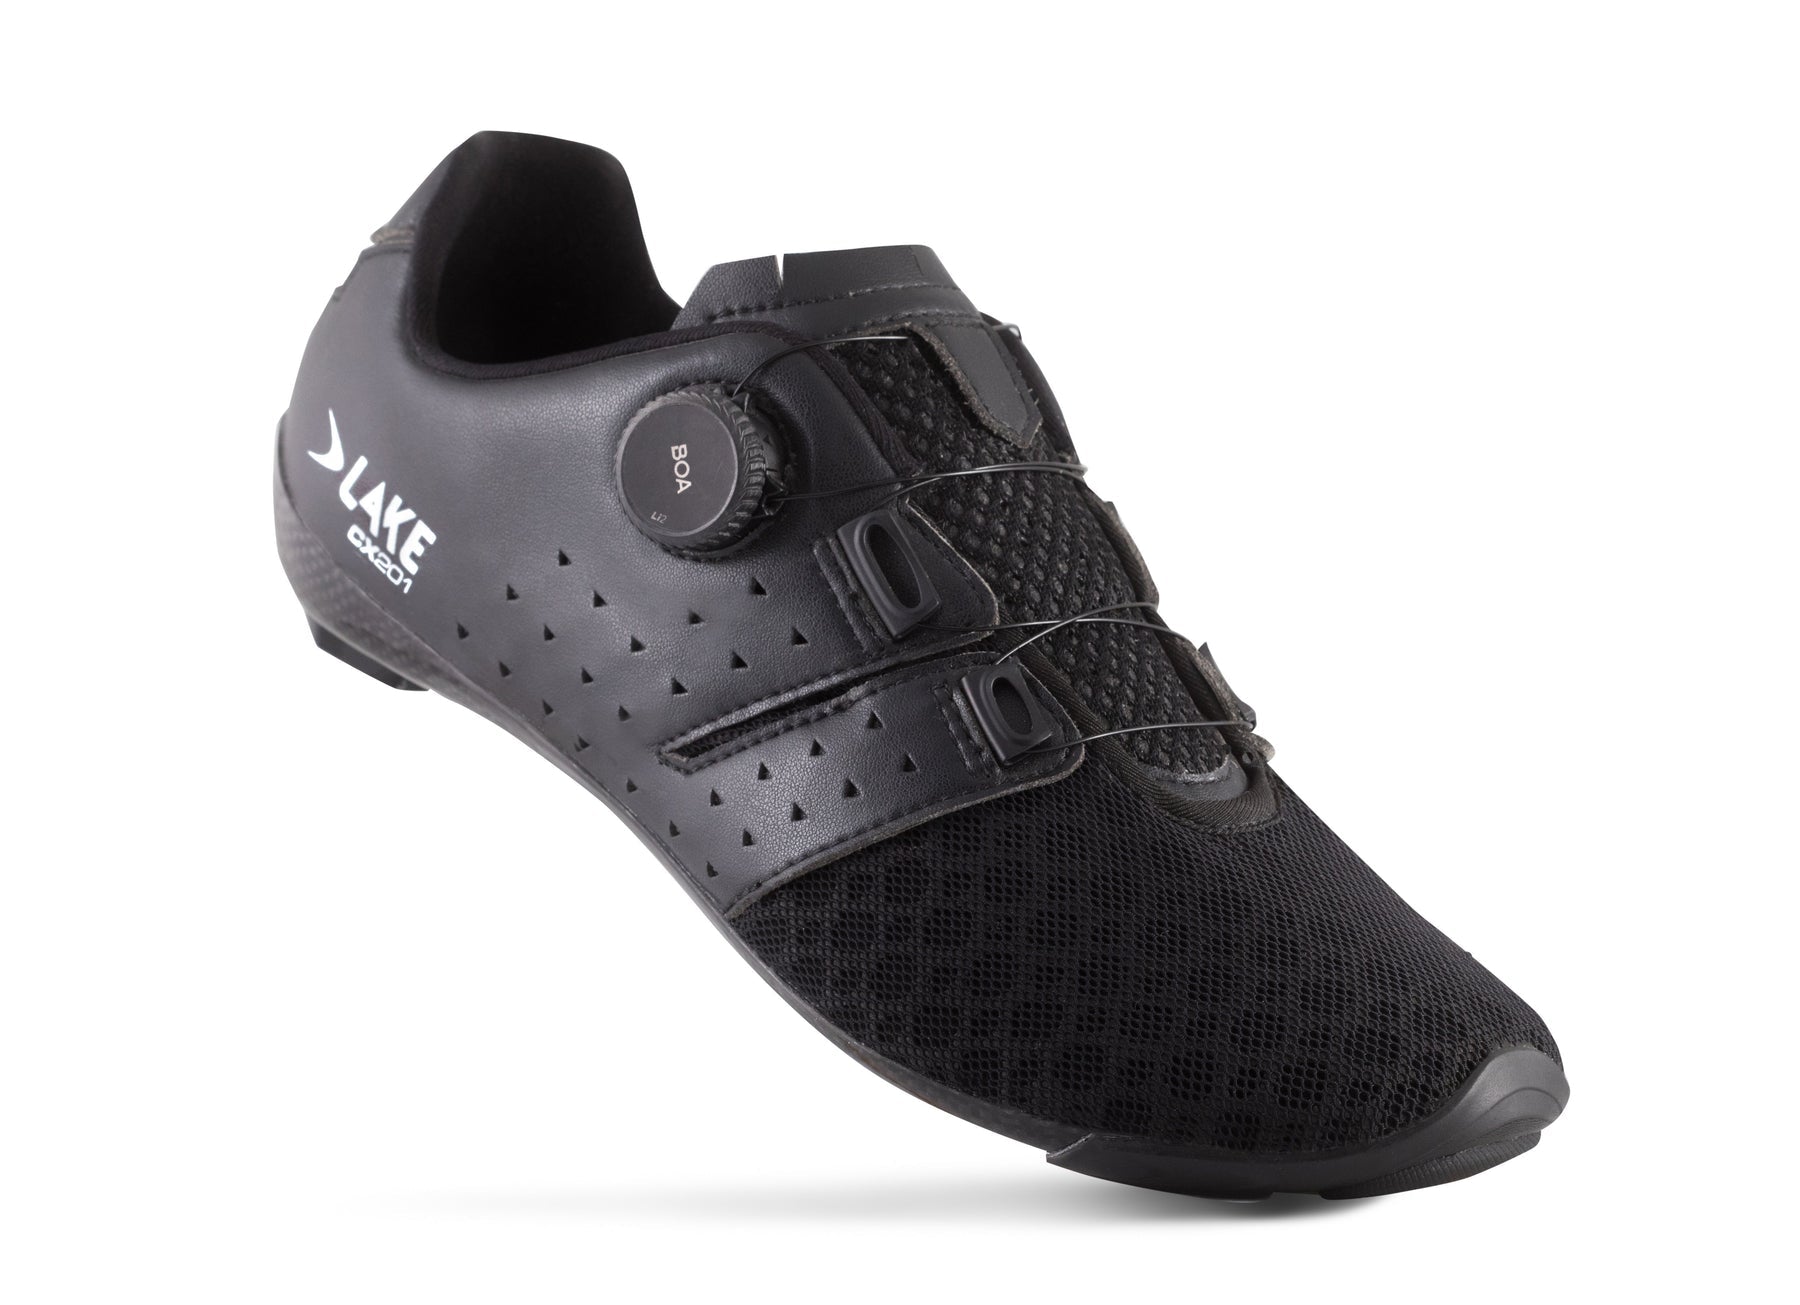 Lake Cycling Shoes, CX201, 44 EU